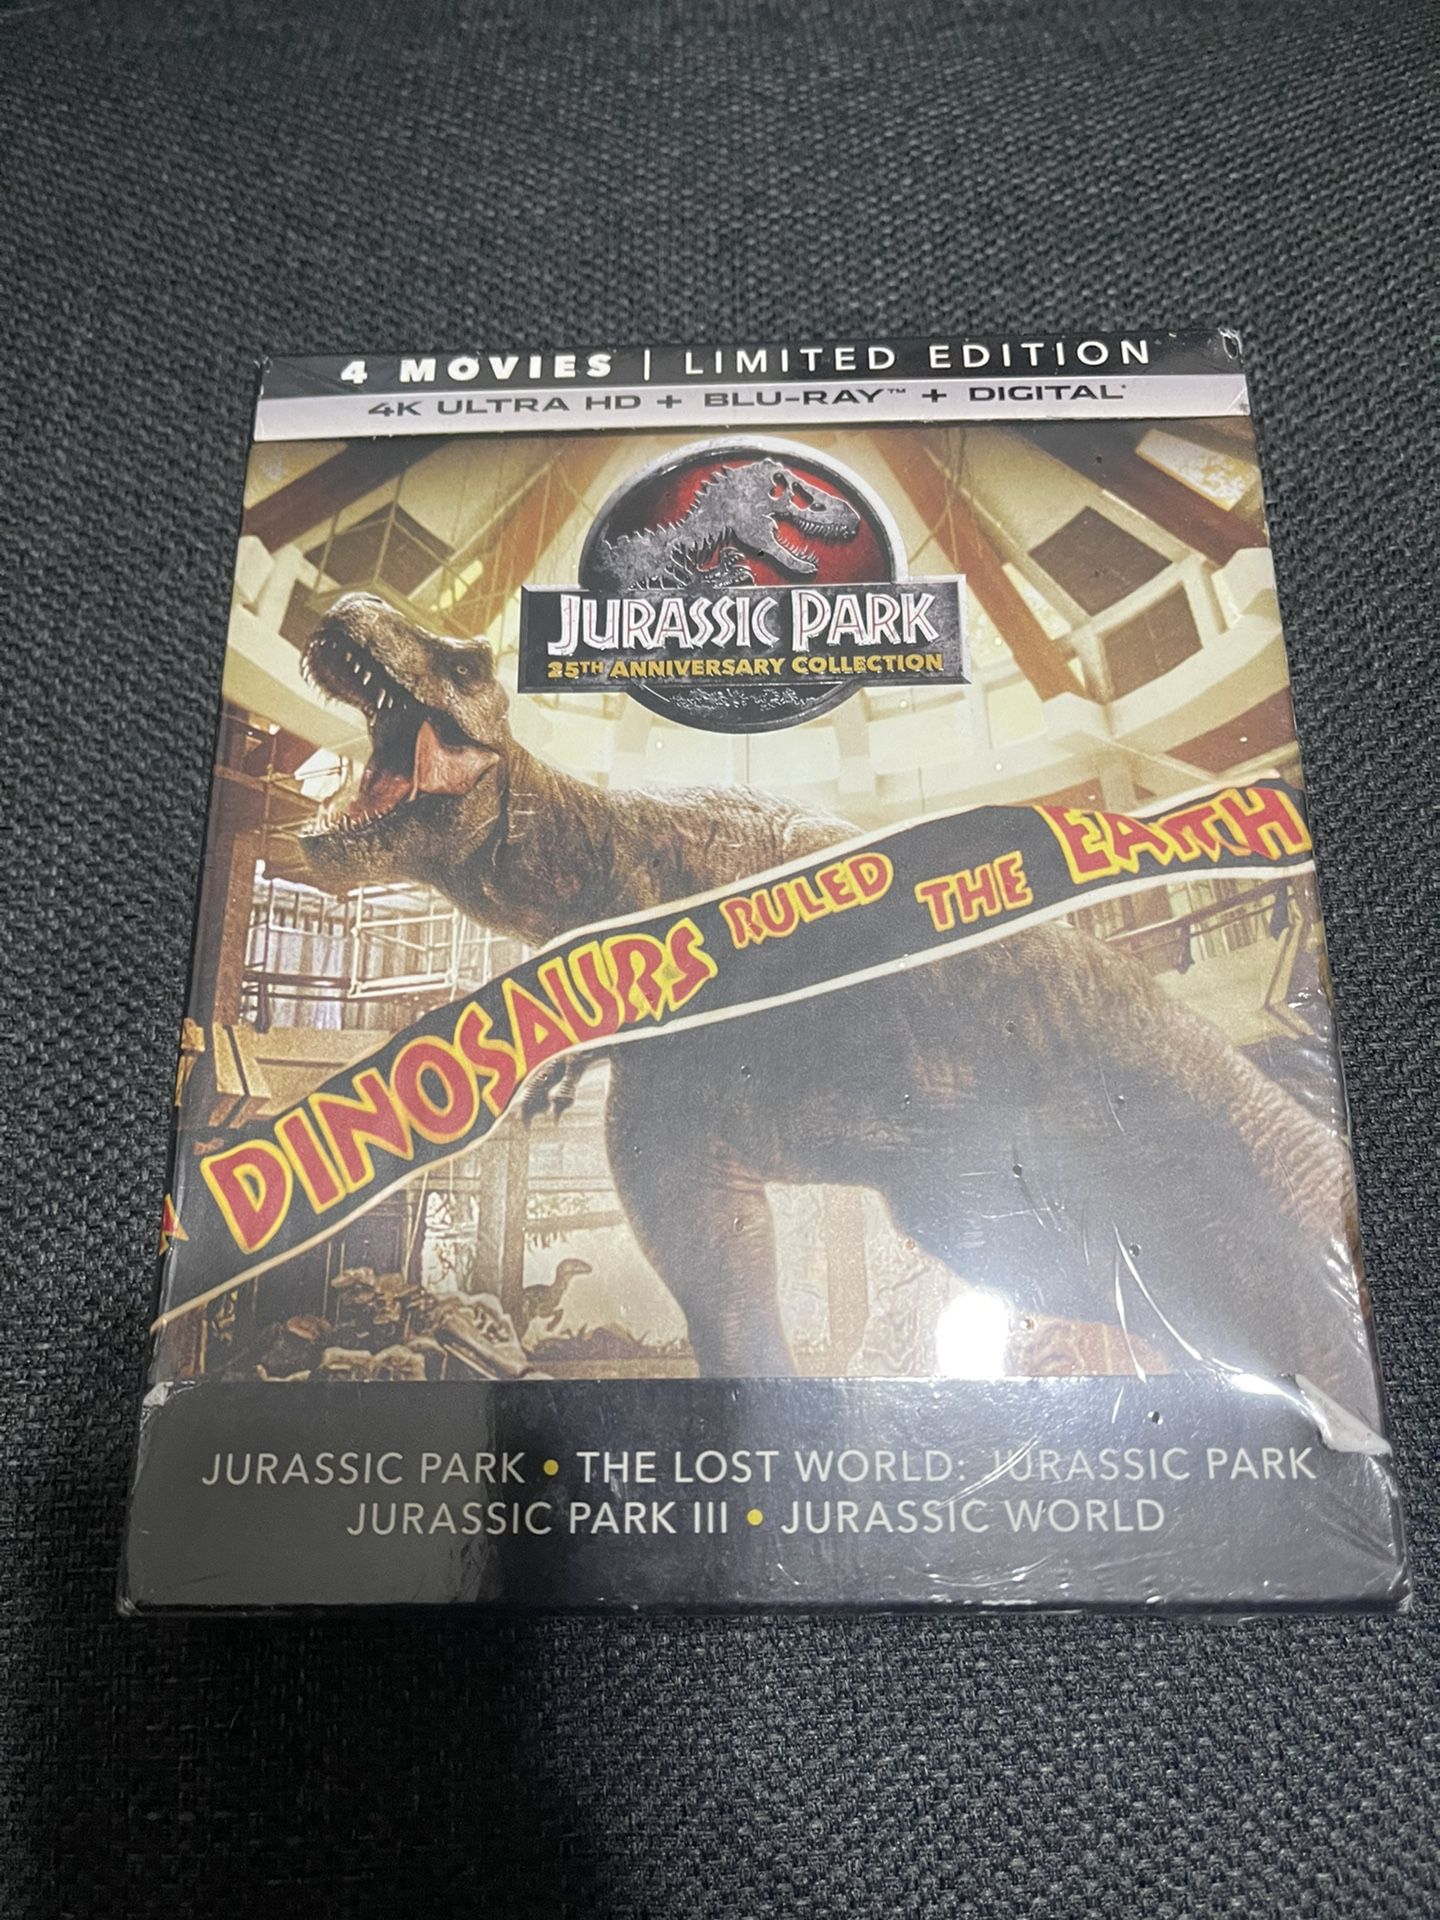 Jurassic Park 4 Movie Collection 4K Ultra HD+ Blu-ray+ Digital